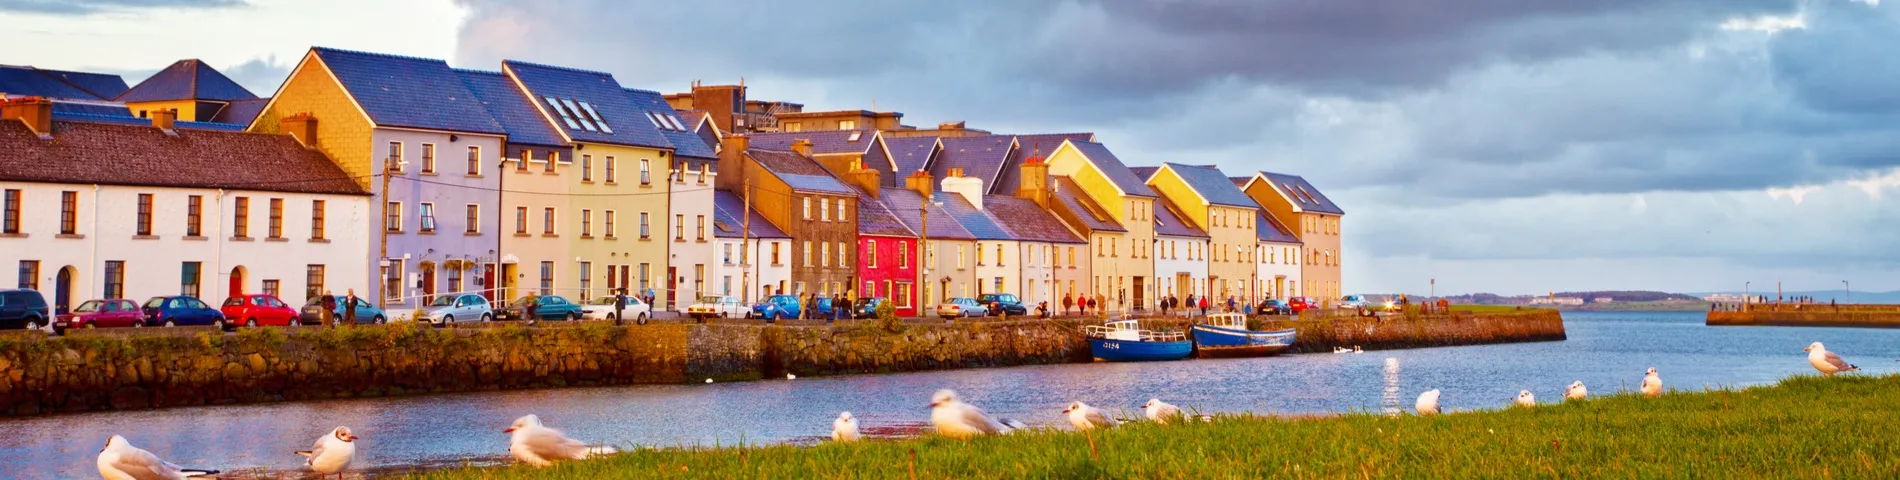 Galway - Všoebecný